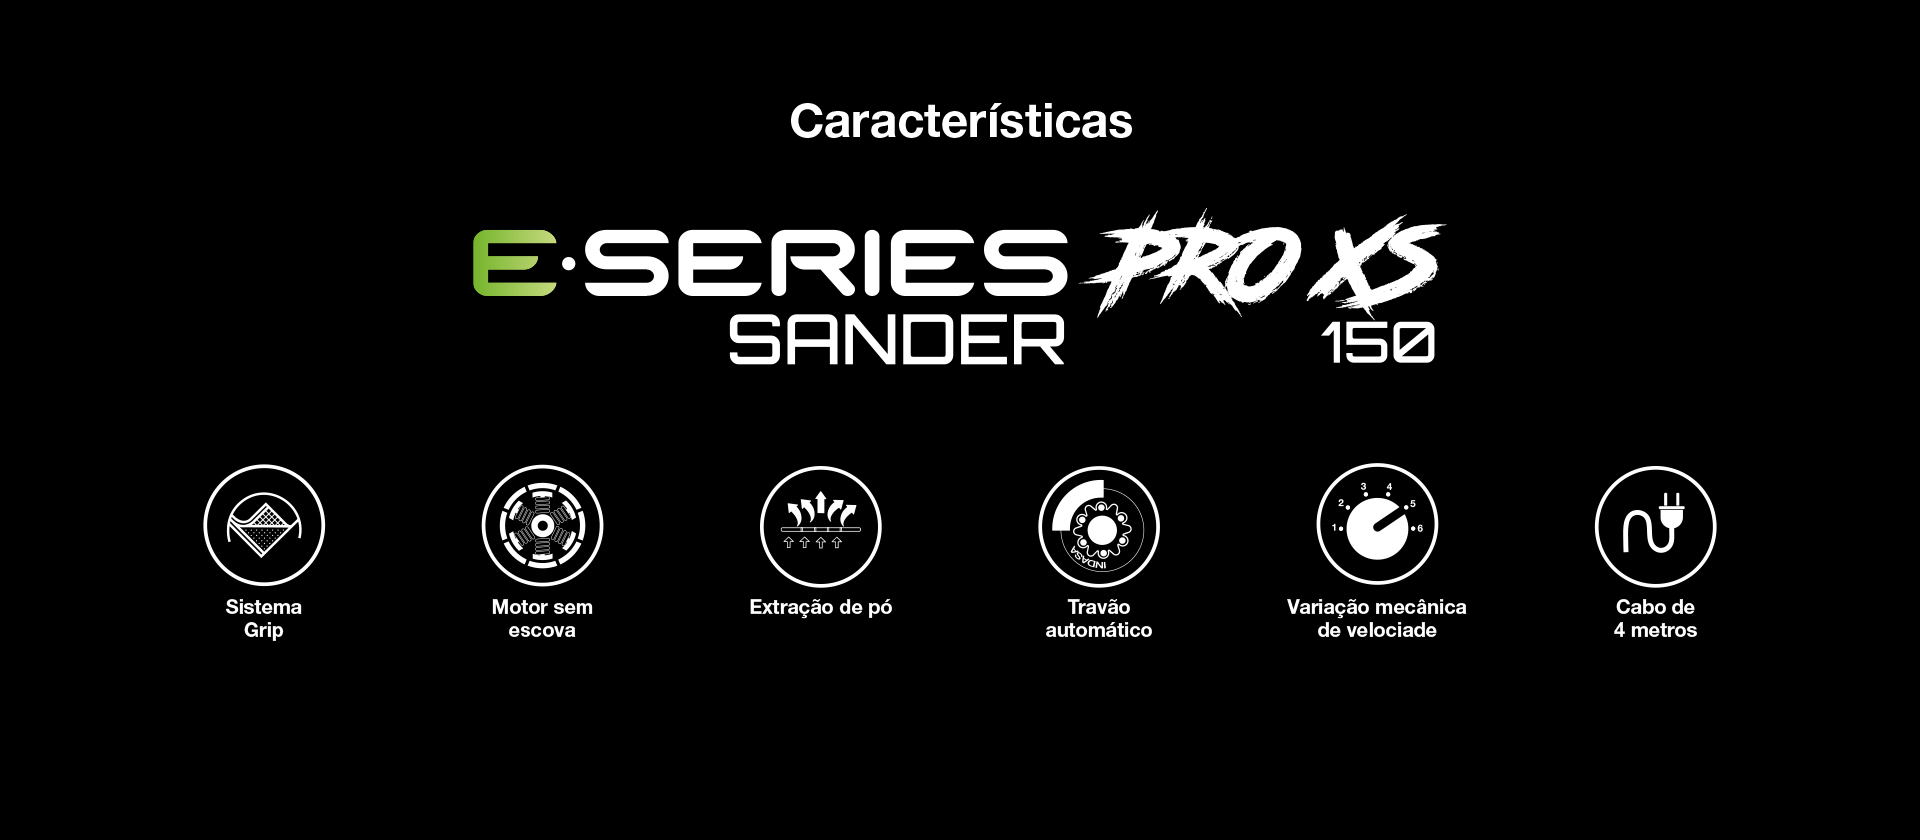 PRO XSander Features and Benefits